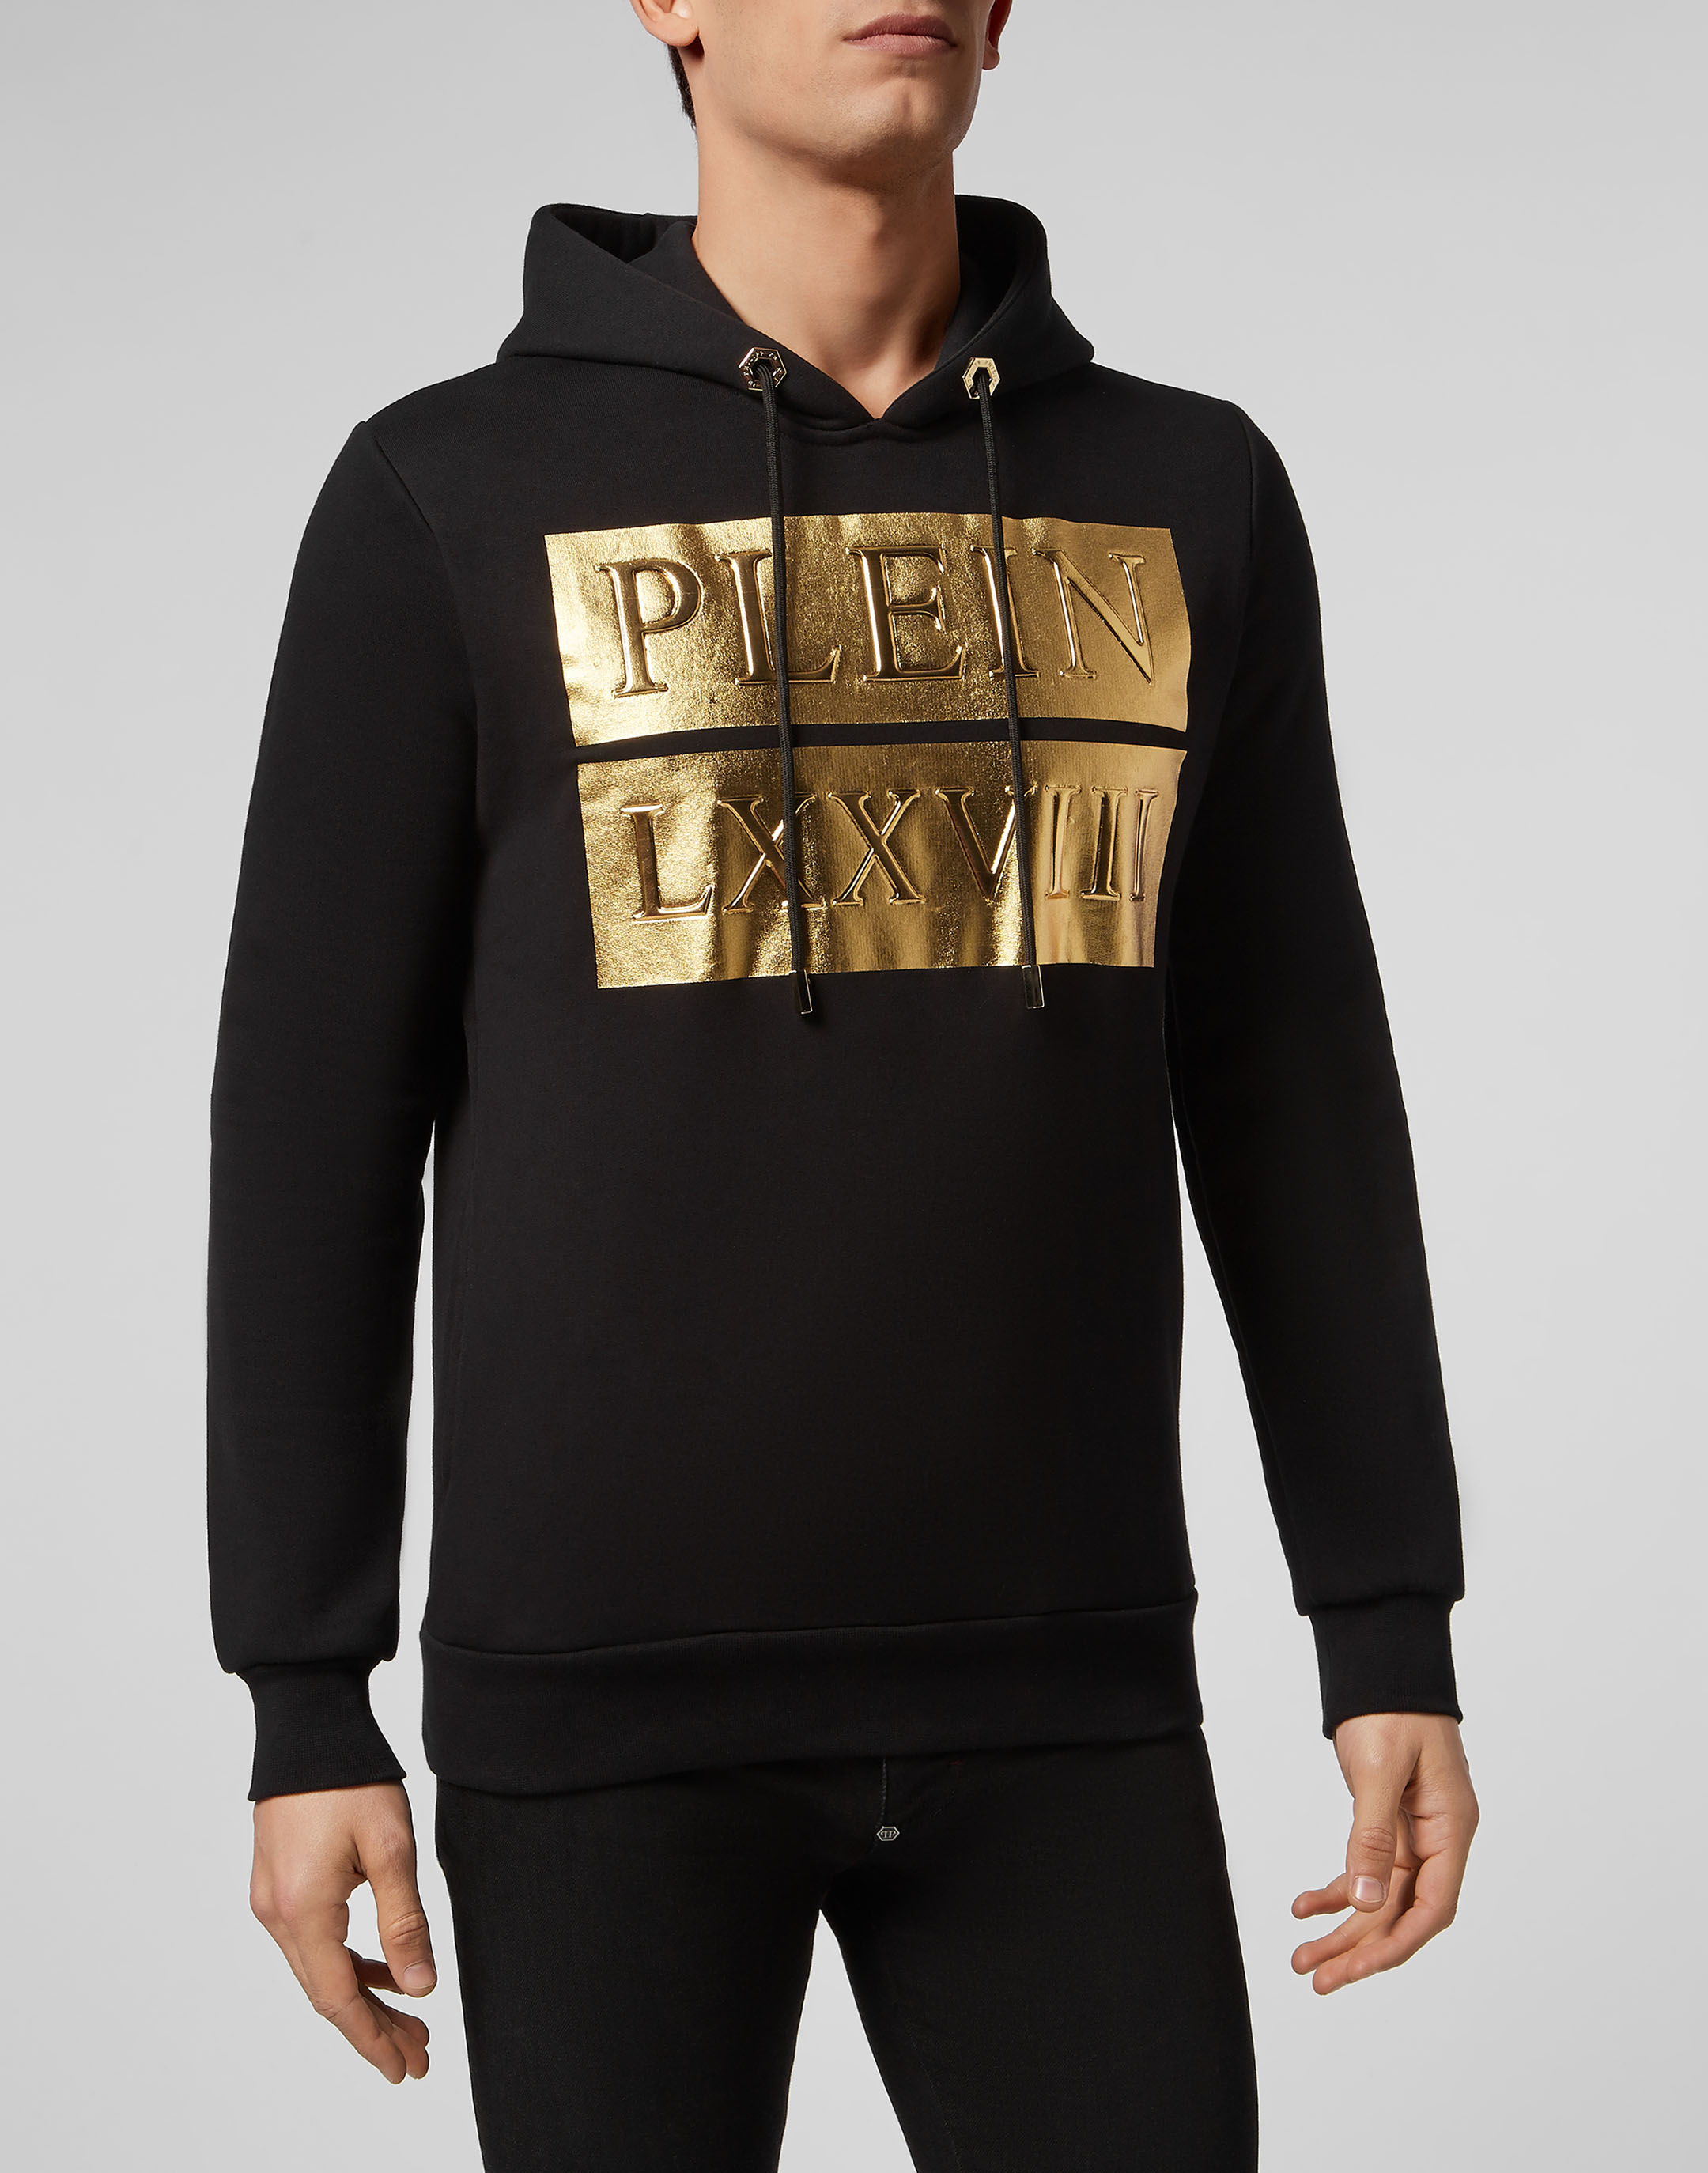 Grote waanidee Assimileren in verlegenheid gebracht Hoodie sweatshirt Gold | Philipp Plein